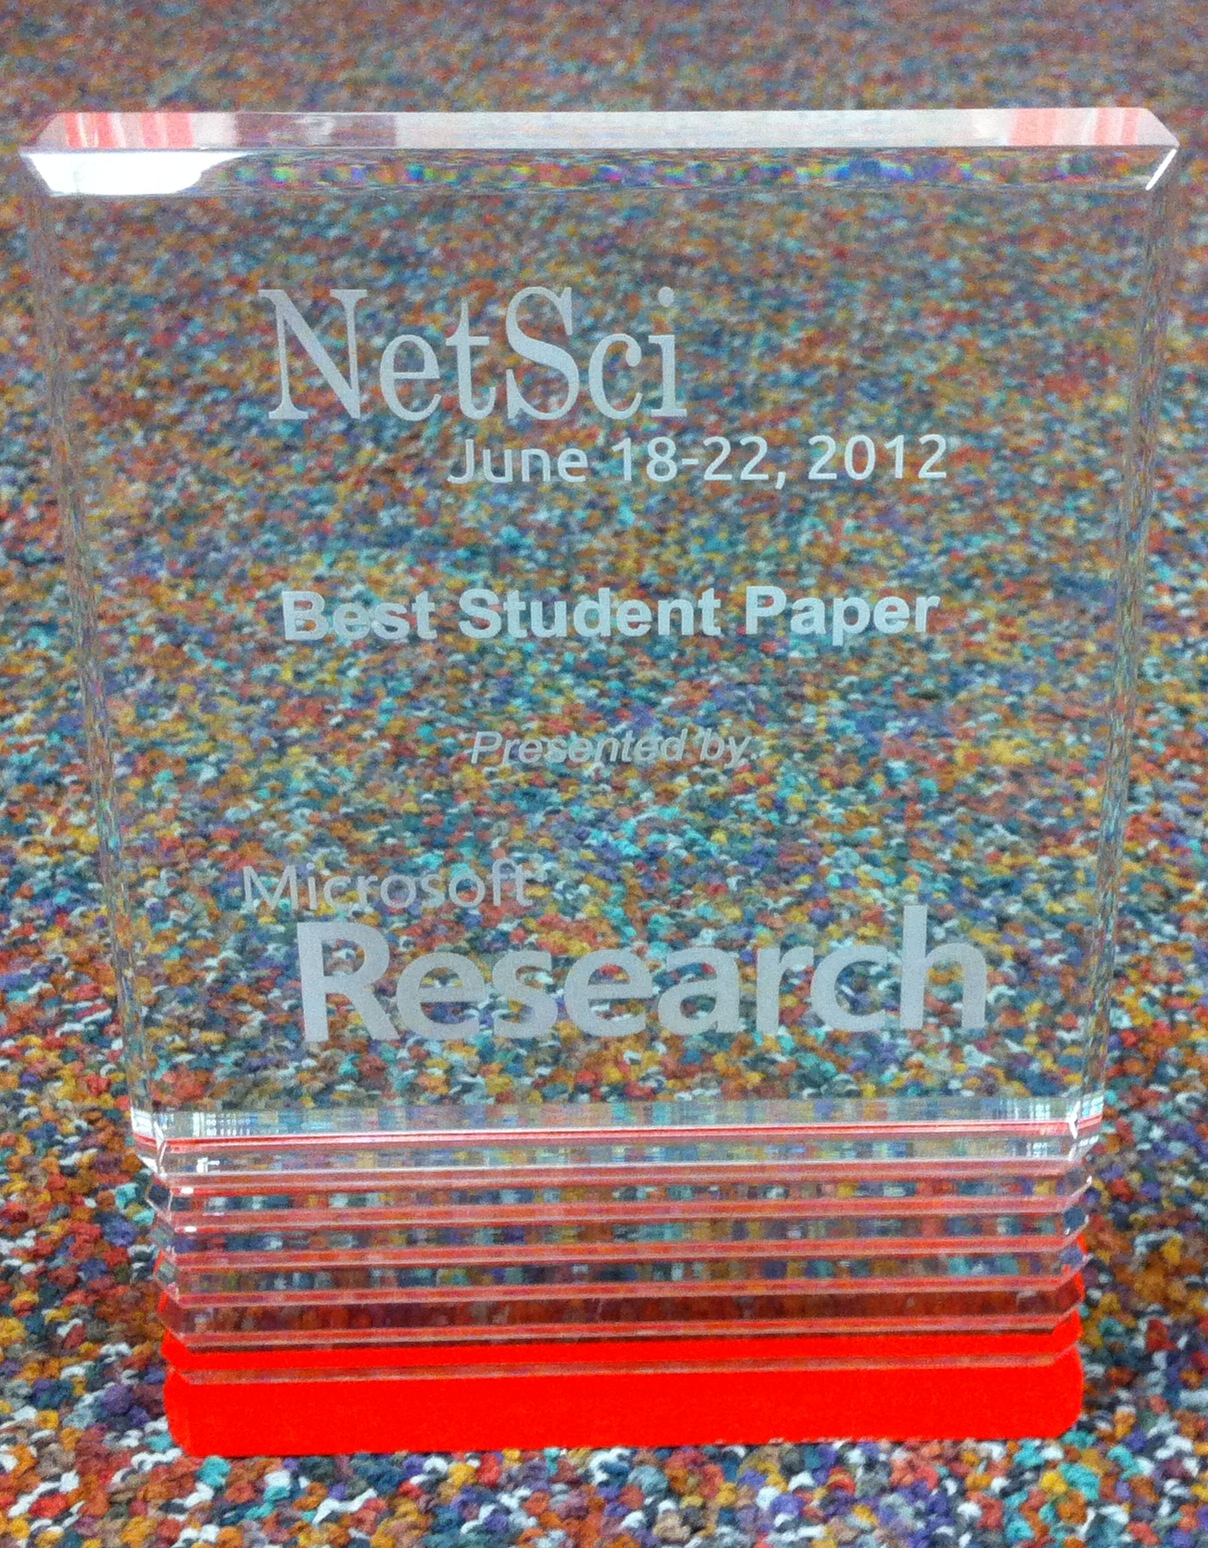 Best student paper trophy